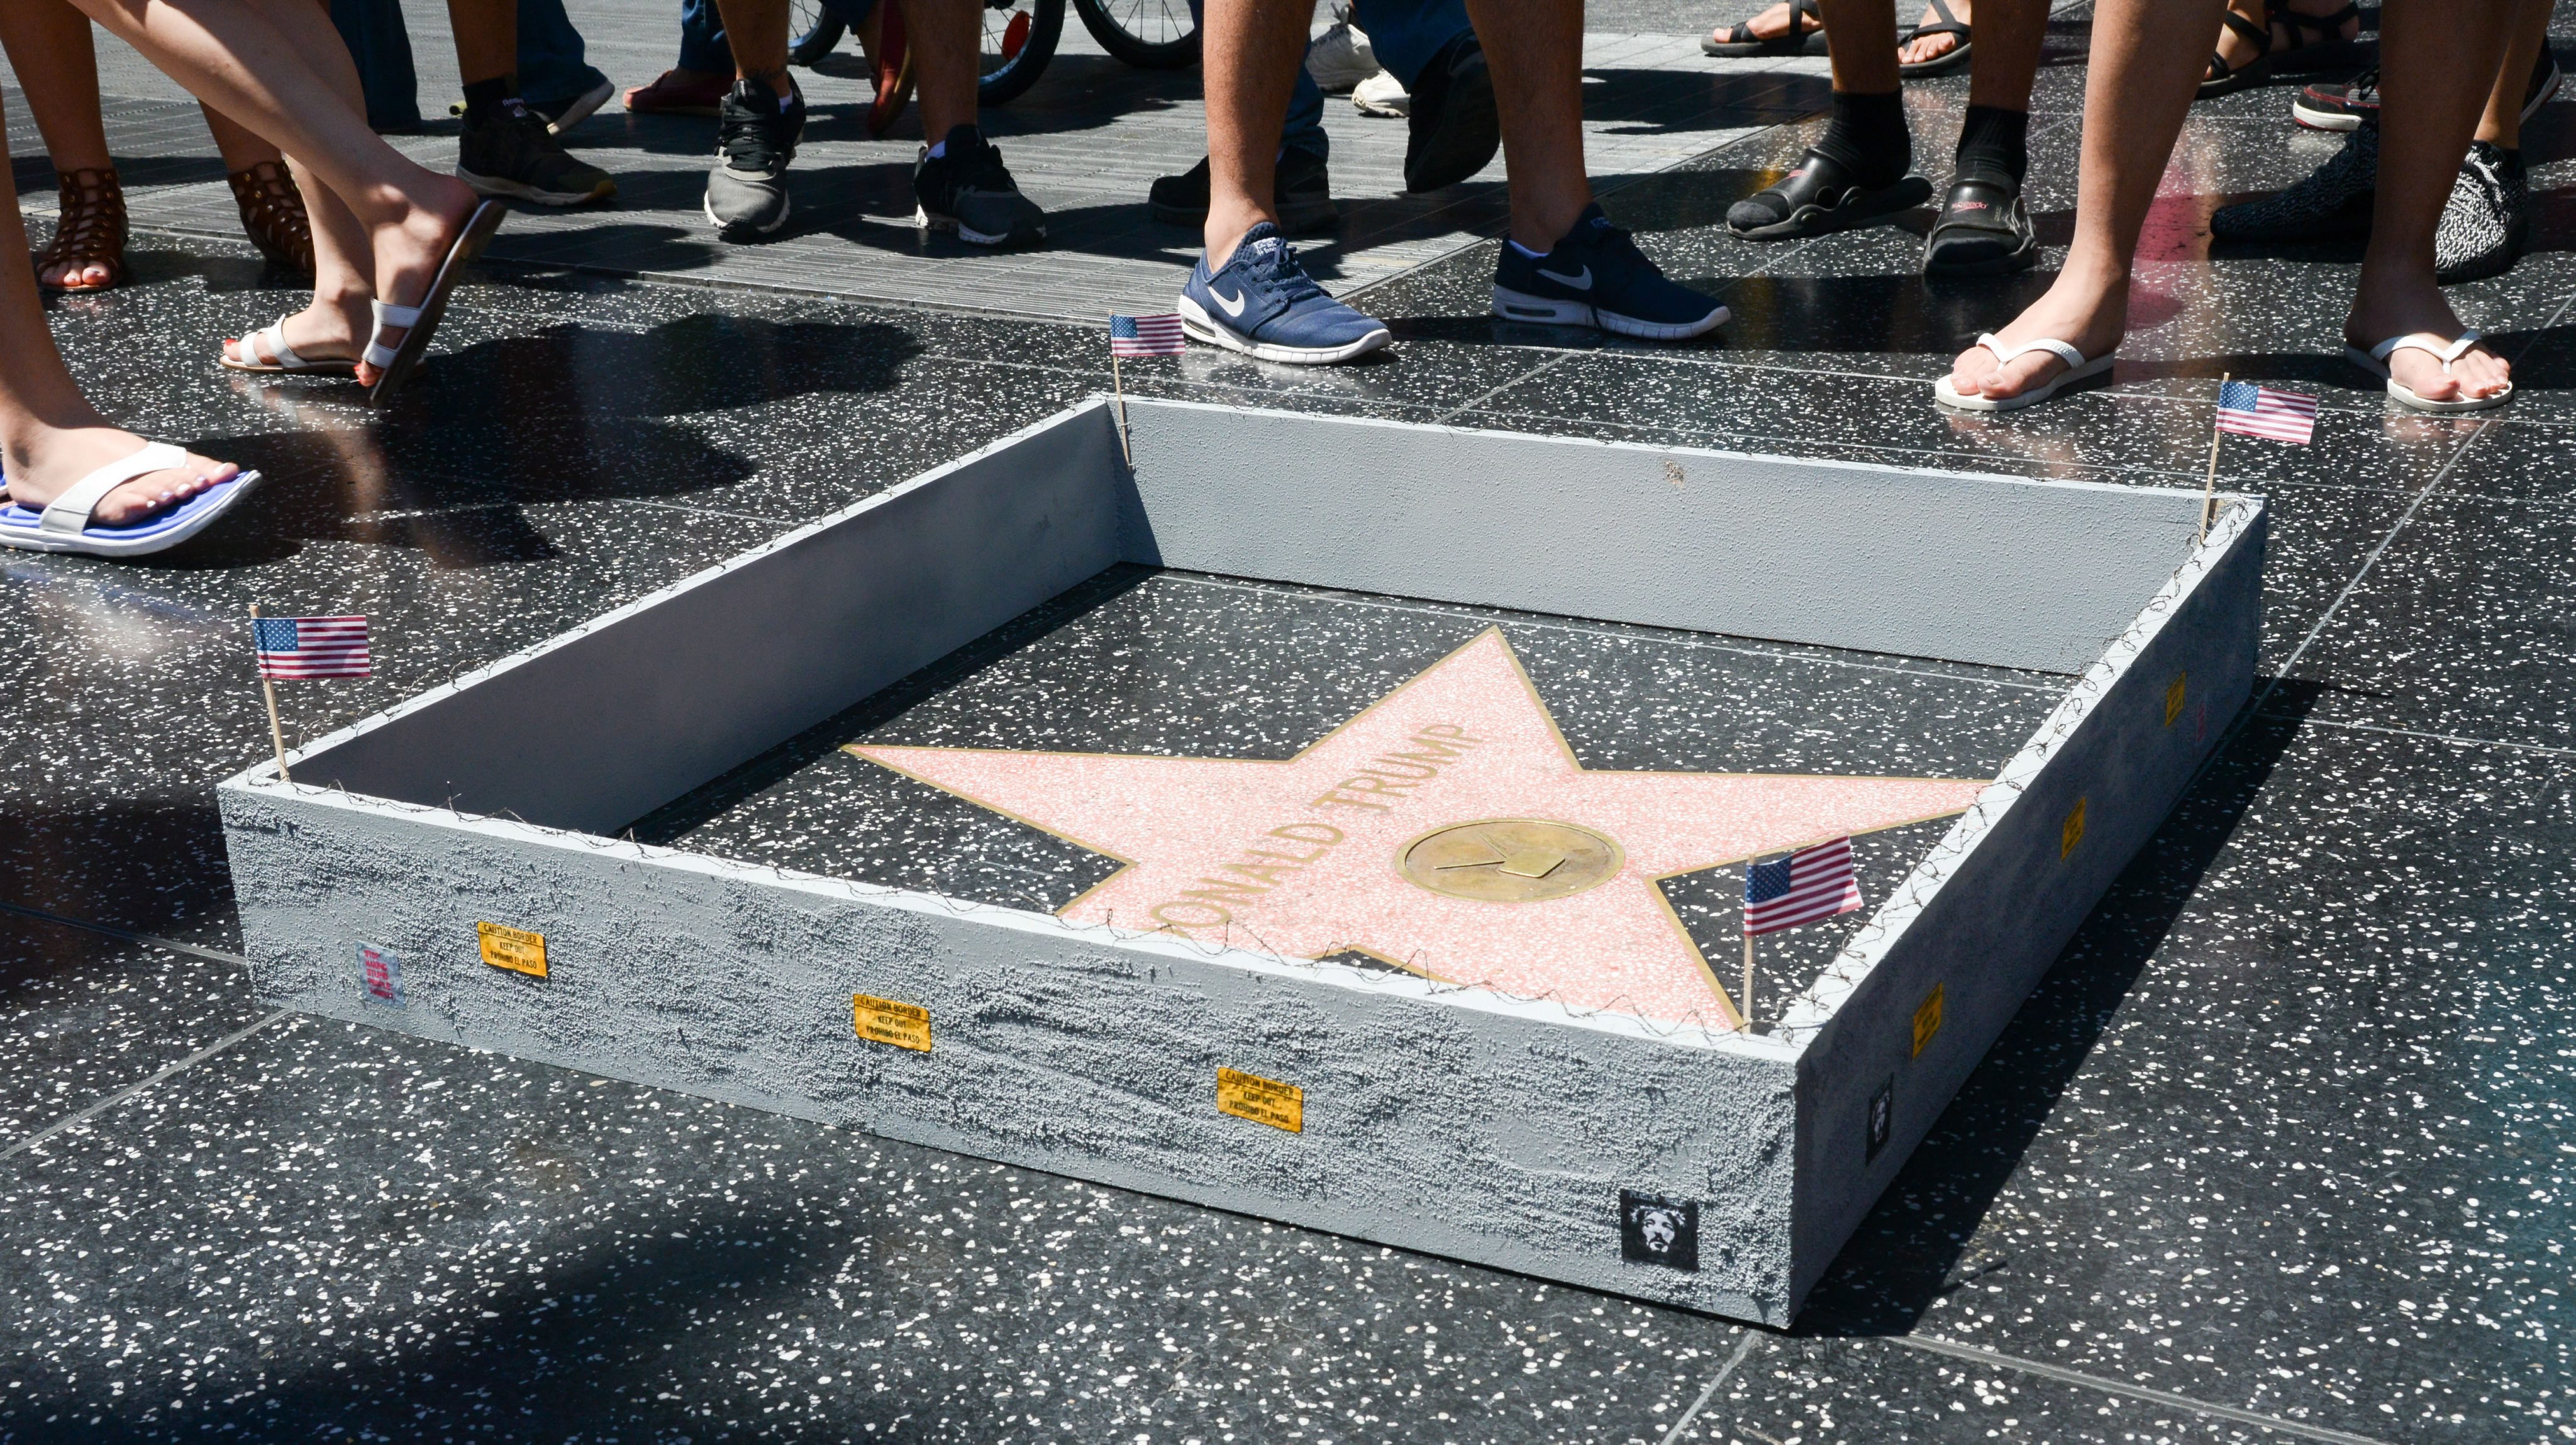 Donald Trump's Star on the Hollywood Walk of Fame, on July 19, 2016. (Nick Stern&mdash;EPA)